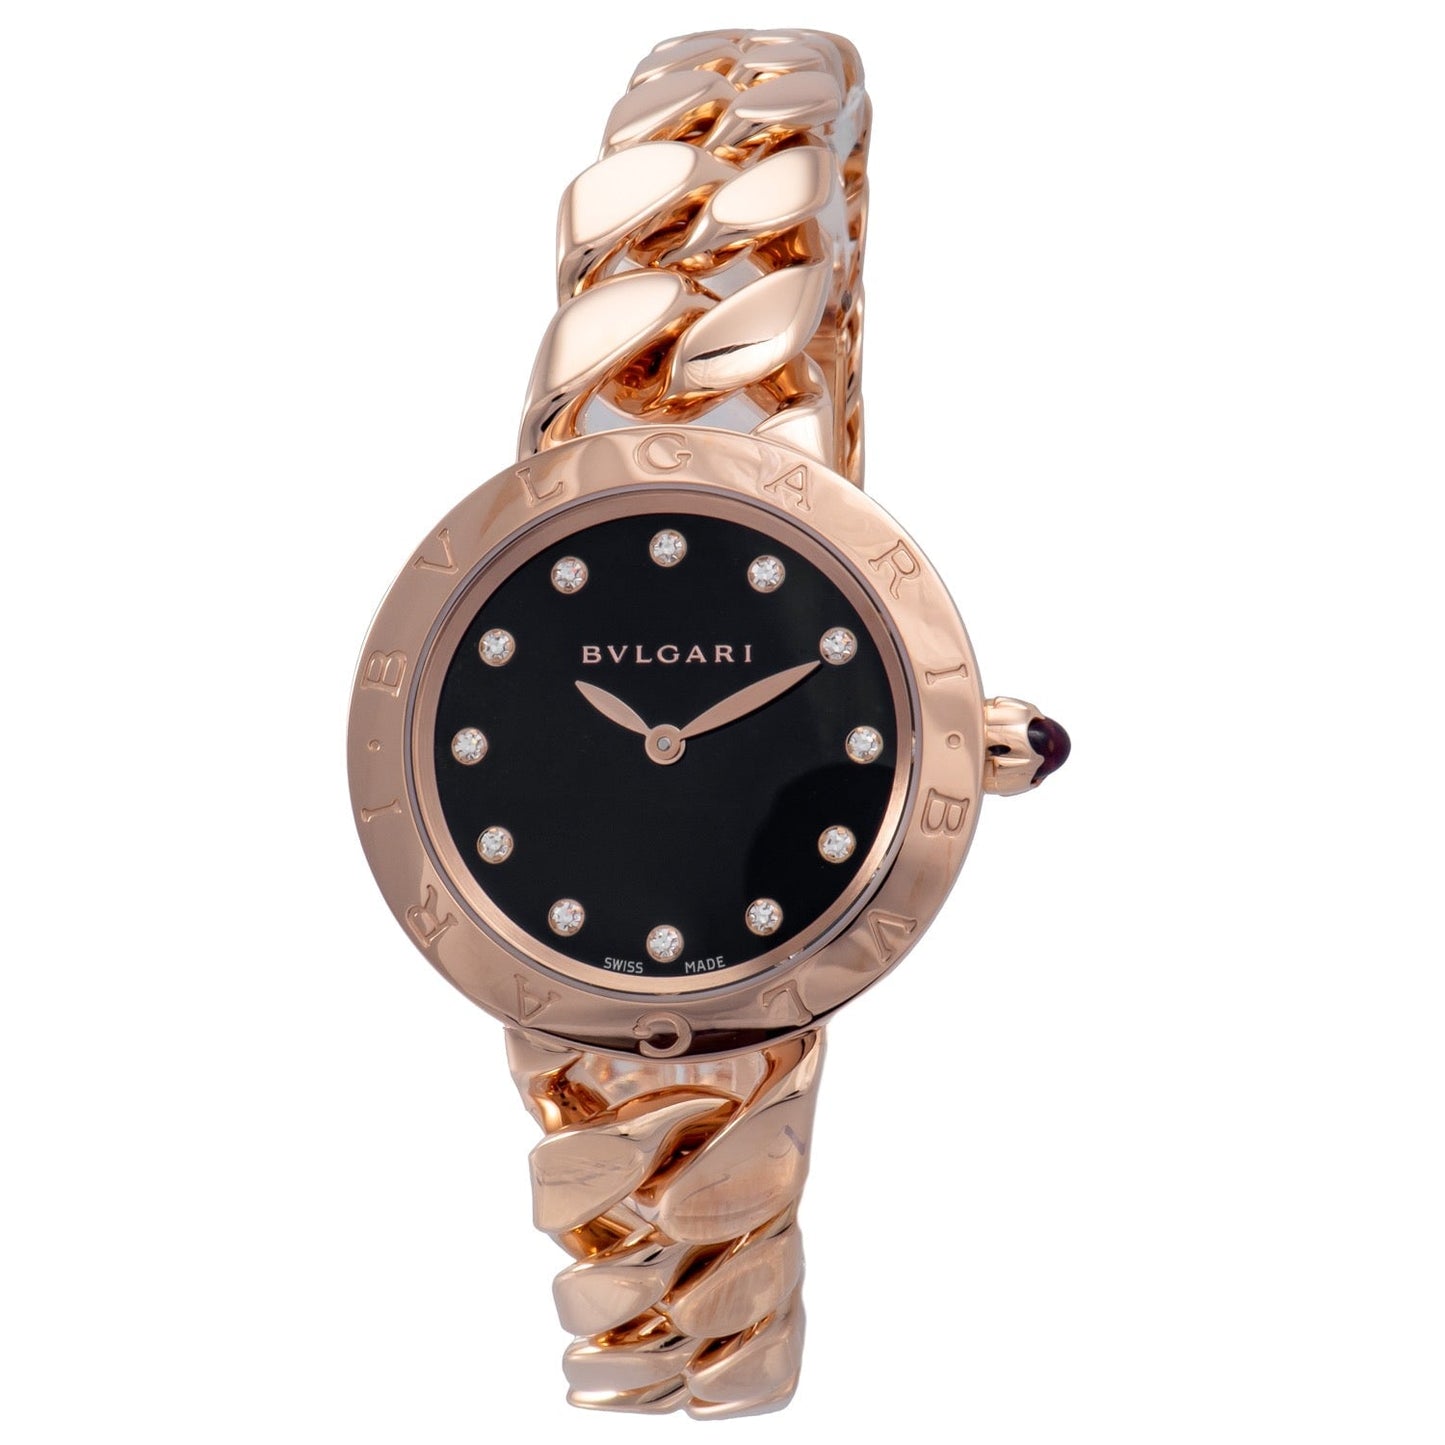 Bvlgari Catene Pink Gold Black Lacquer Dial Ladies Watch 102036